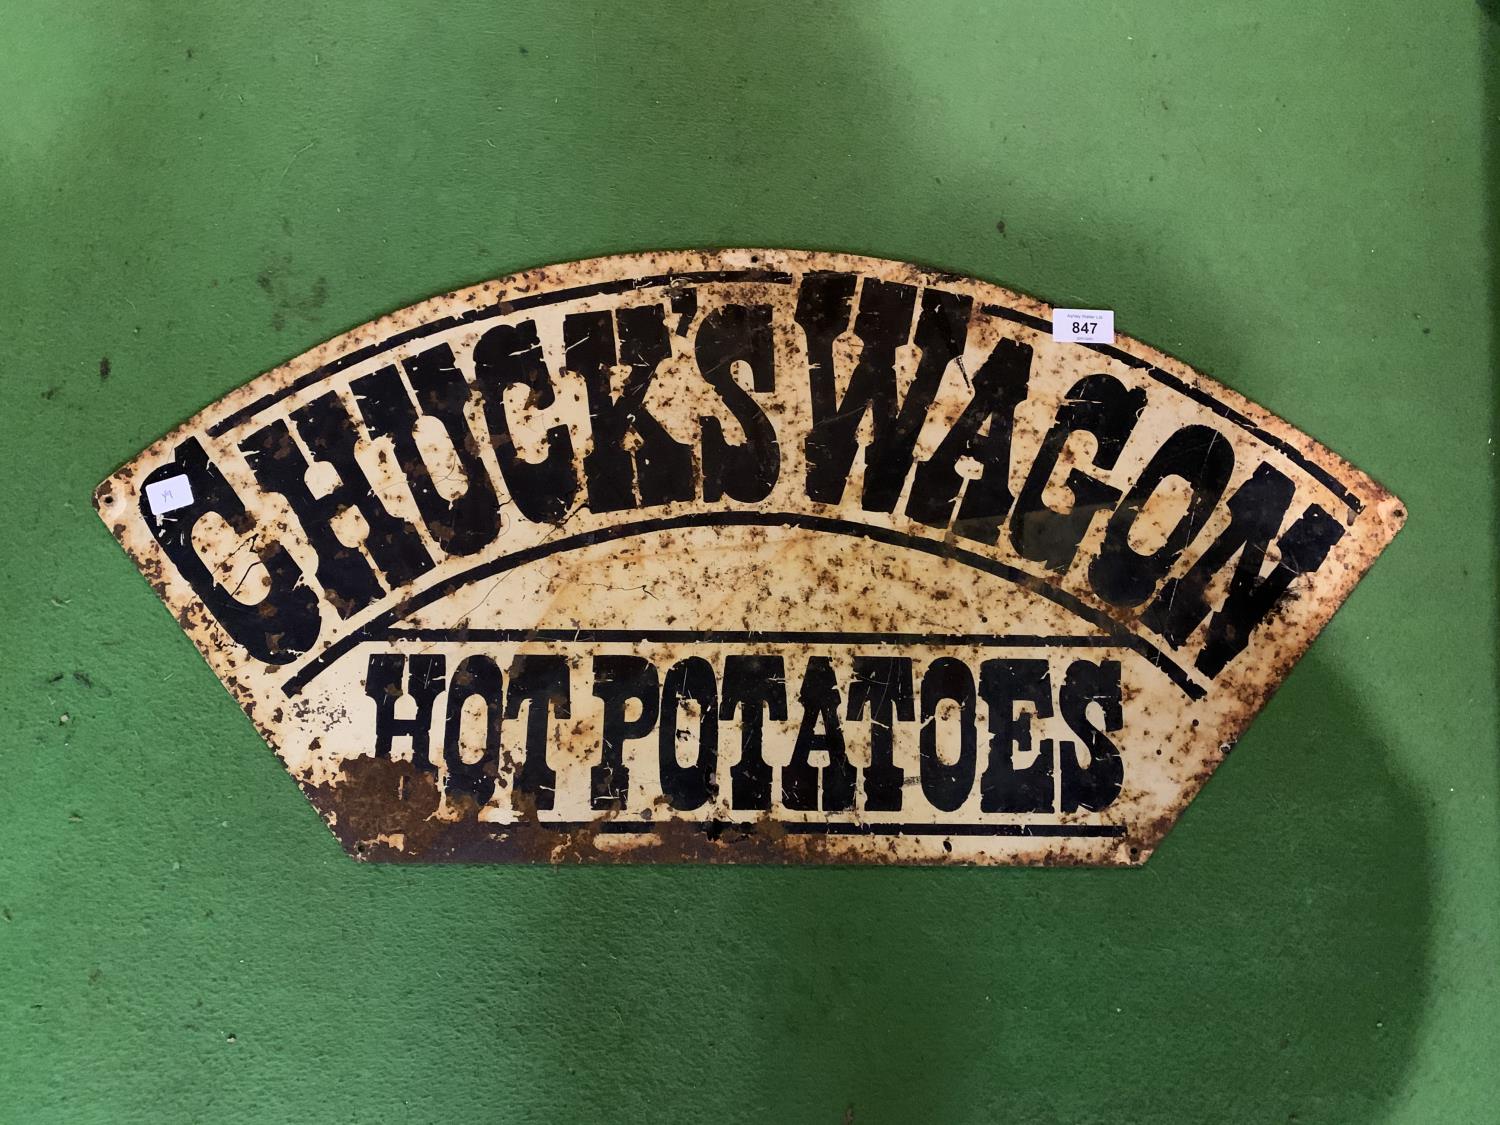 A VINTAGE METAL "CHUCK'S WAGON HOT POTATOES" SIGN